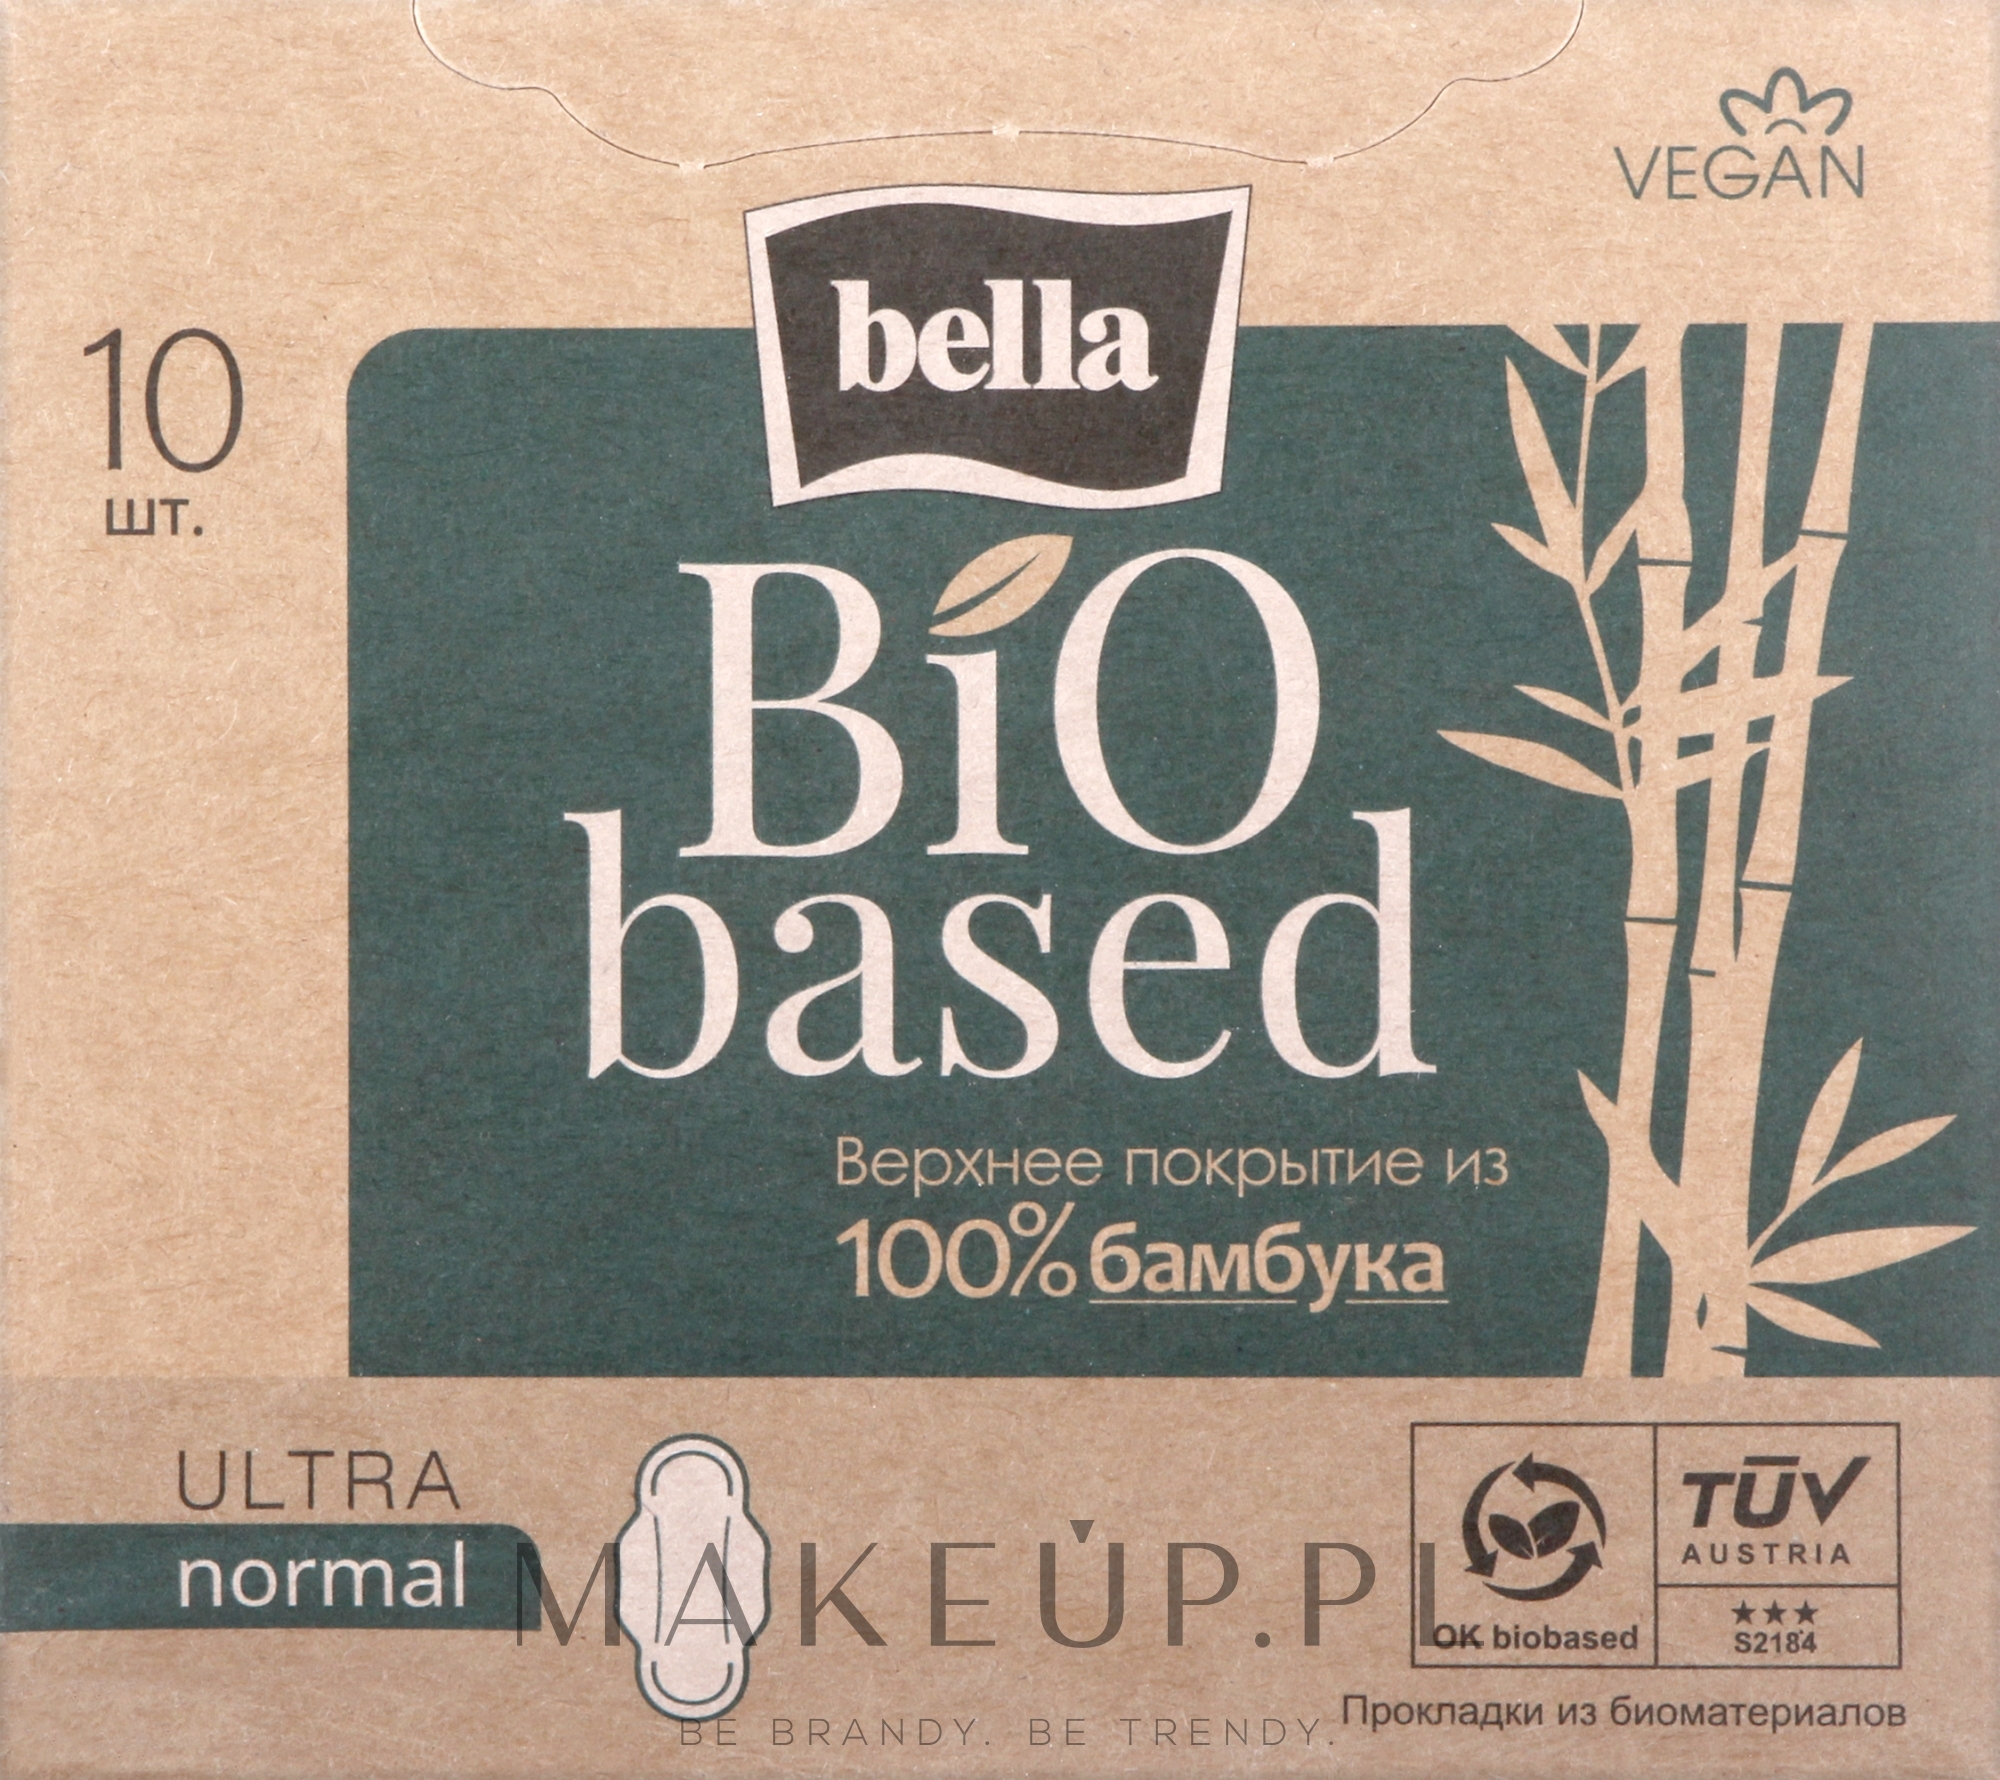 Podpaski Ultra Bio Based Ultra Normal, 10 szt. - Bella — Zdjęcie 10 szt.